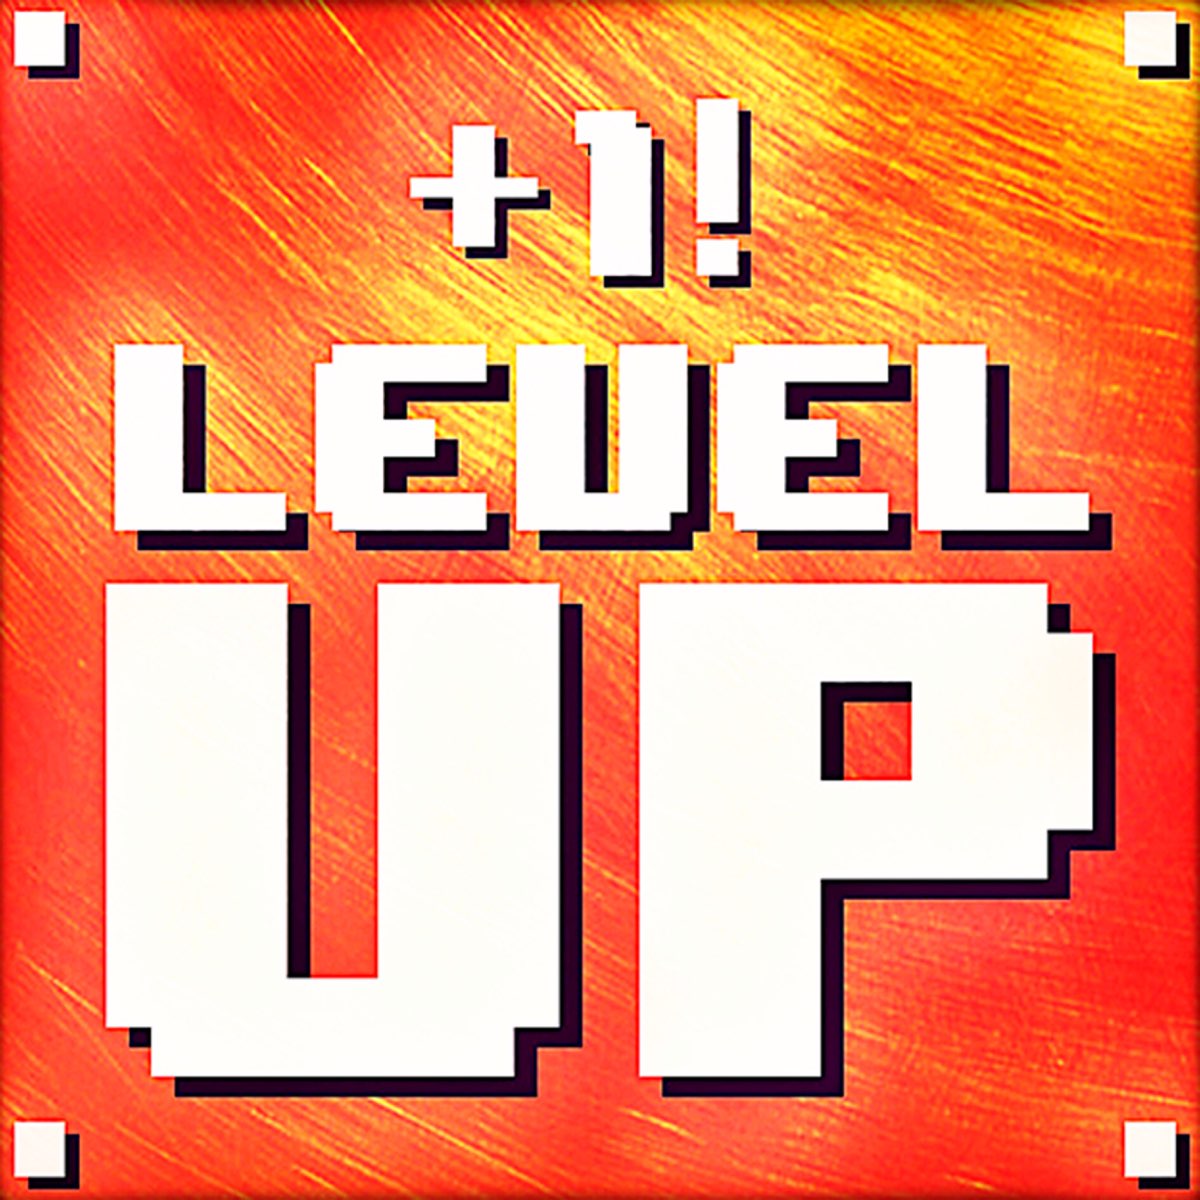 Level up until